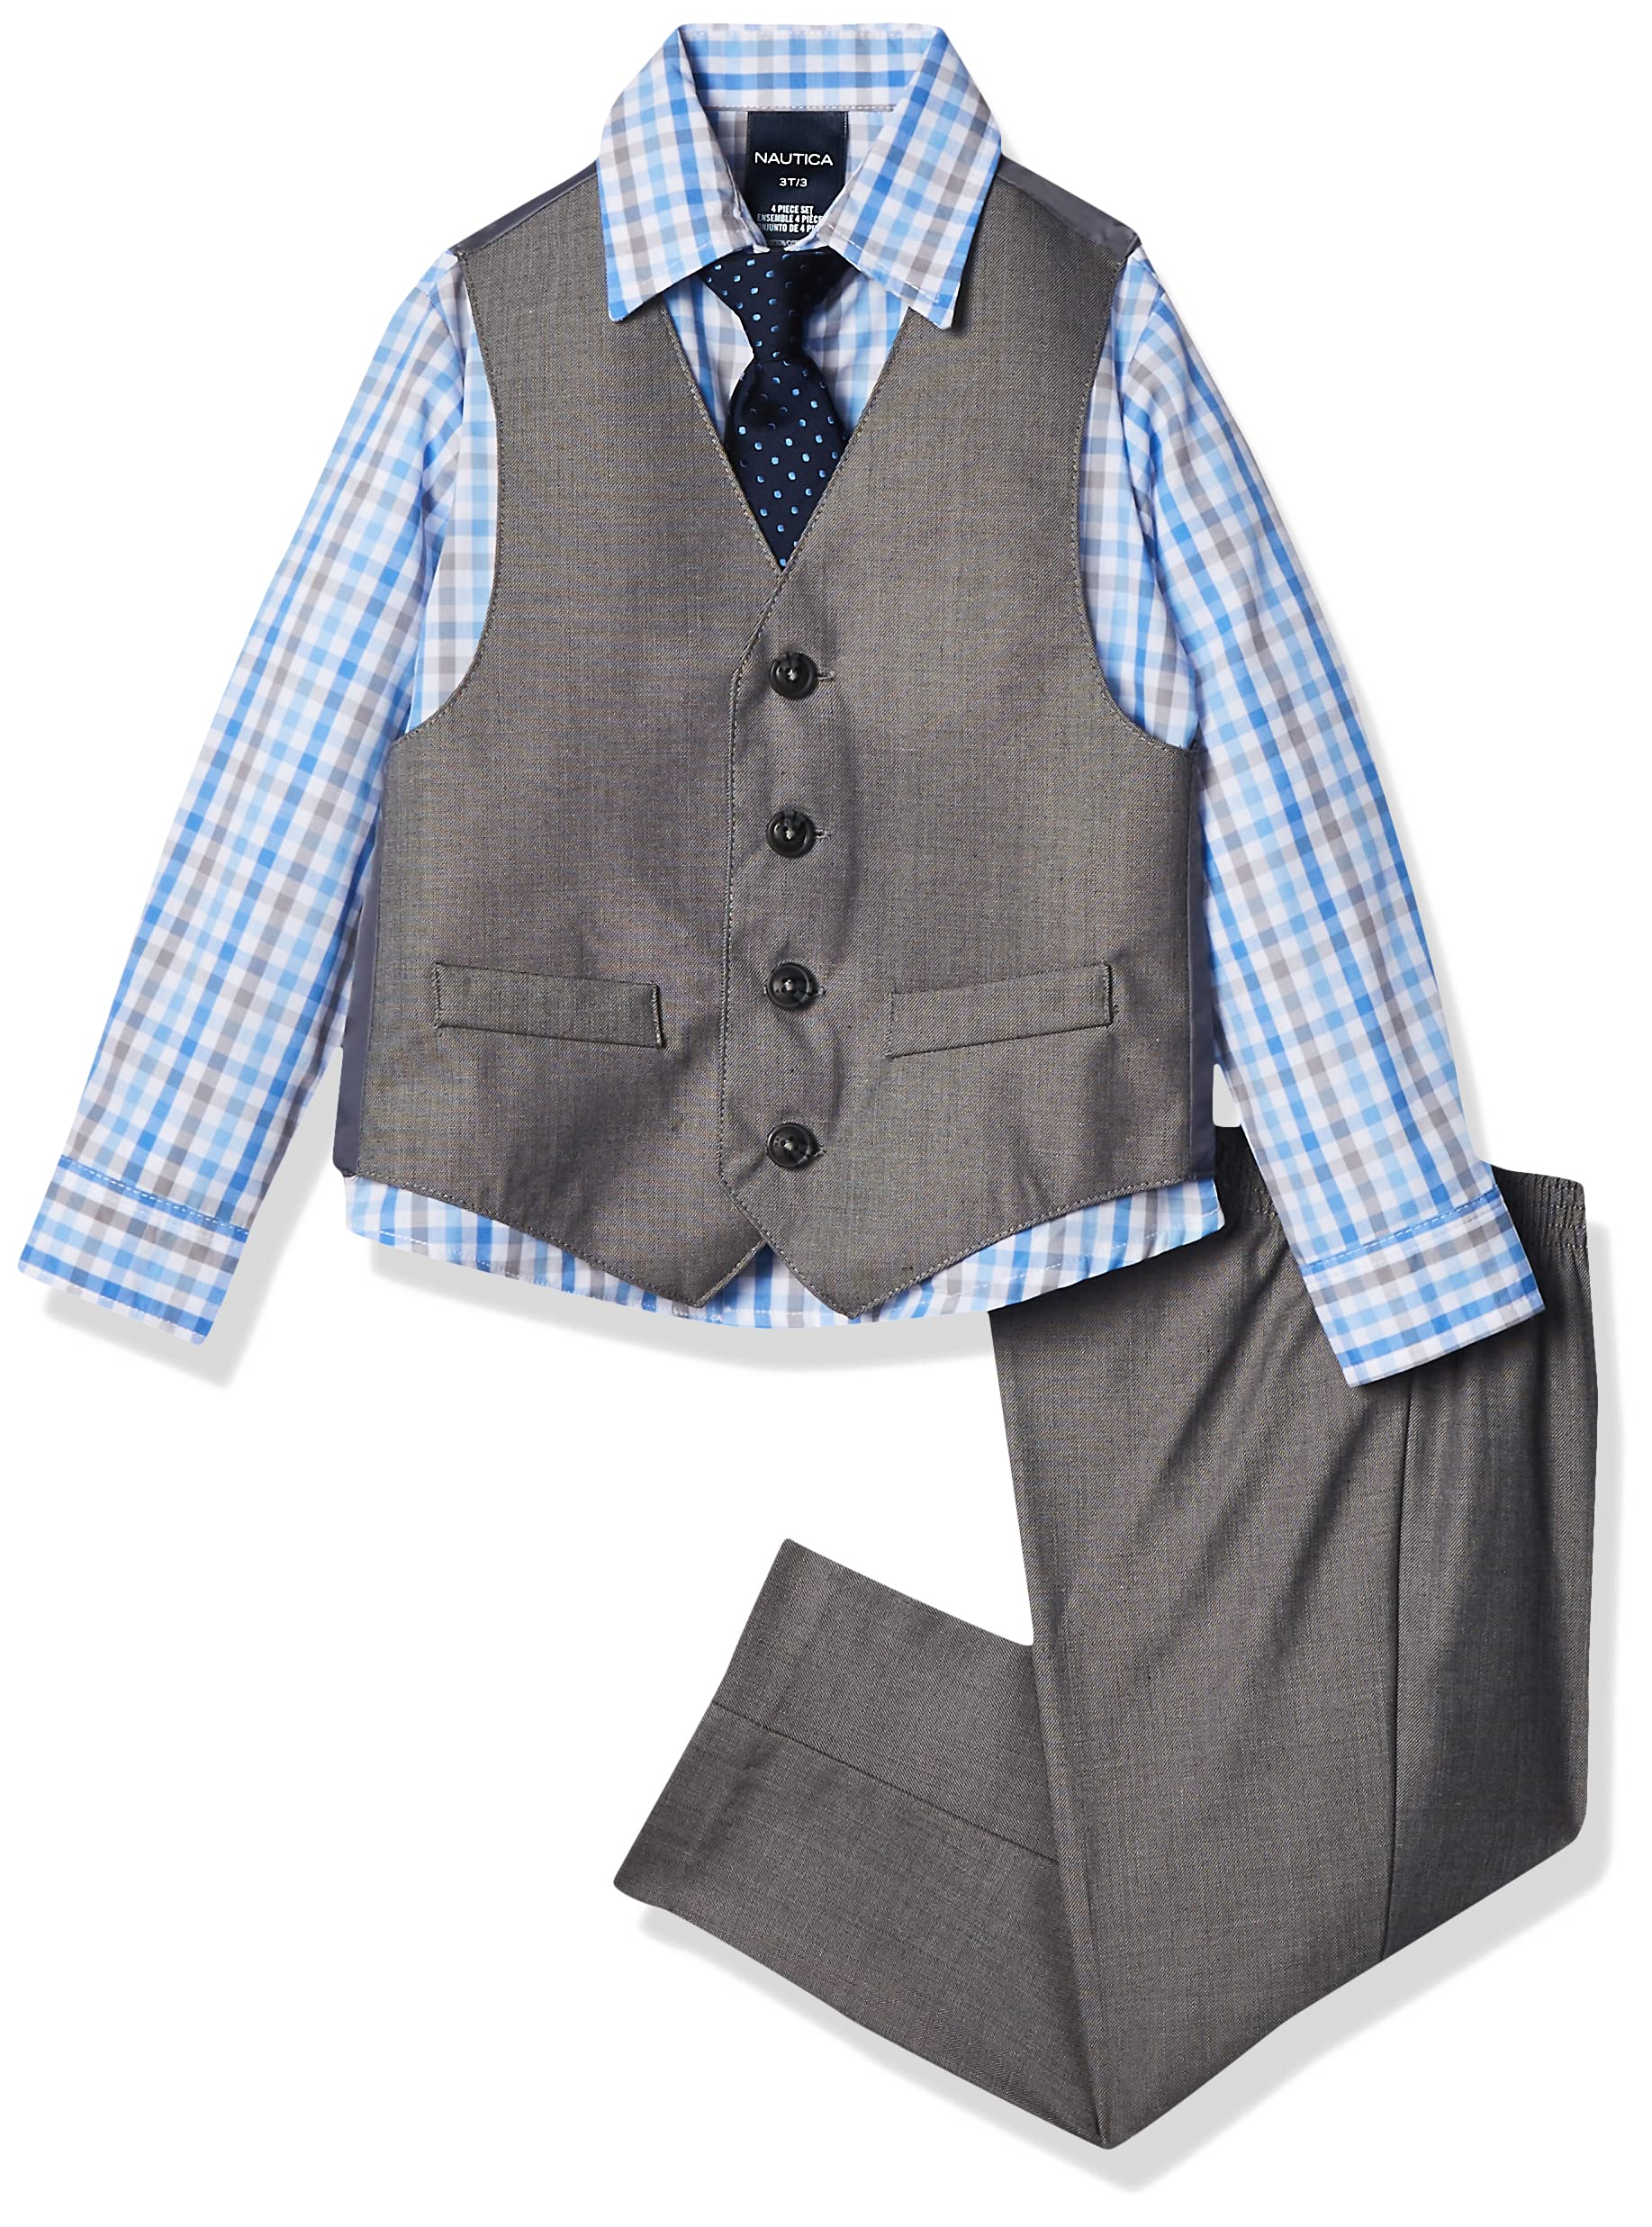 Nautica Boys' Toddler 4-Piece Set with Dress Shirt, Tie, Vest, and Pants